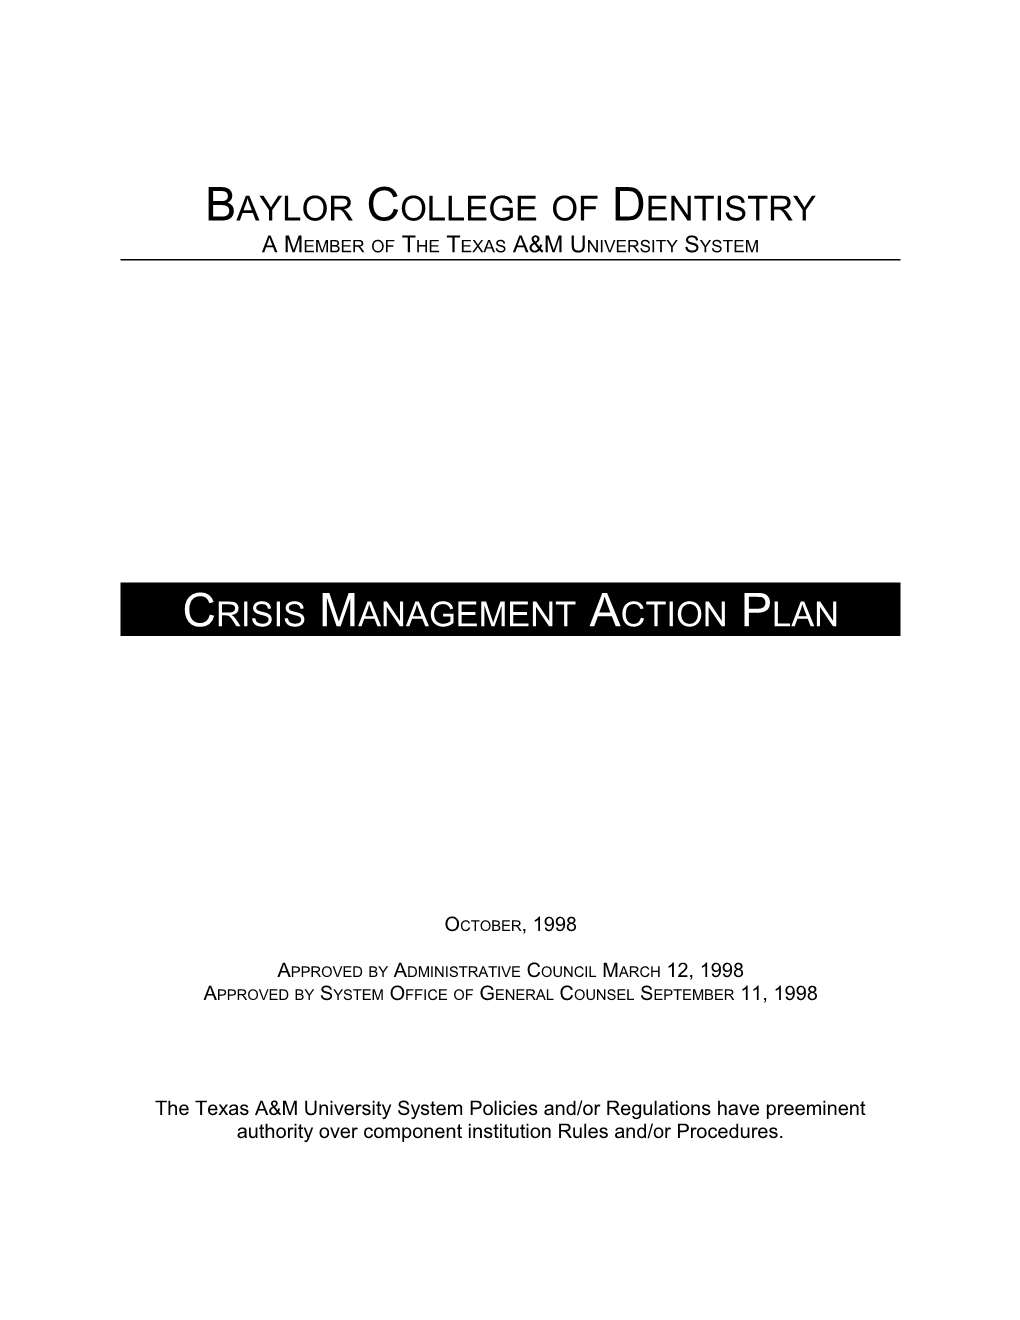 Baylor College of Dentistry s1